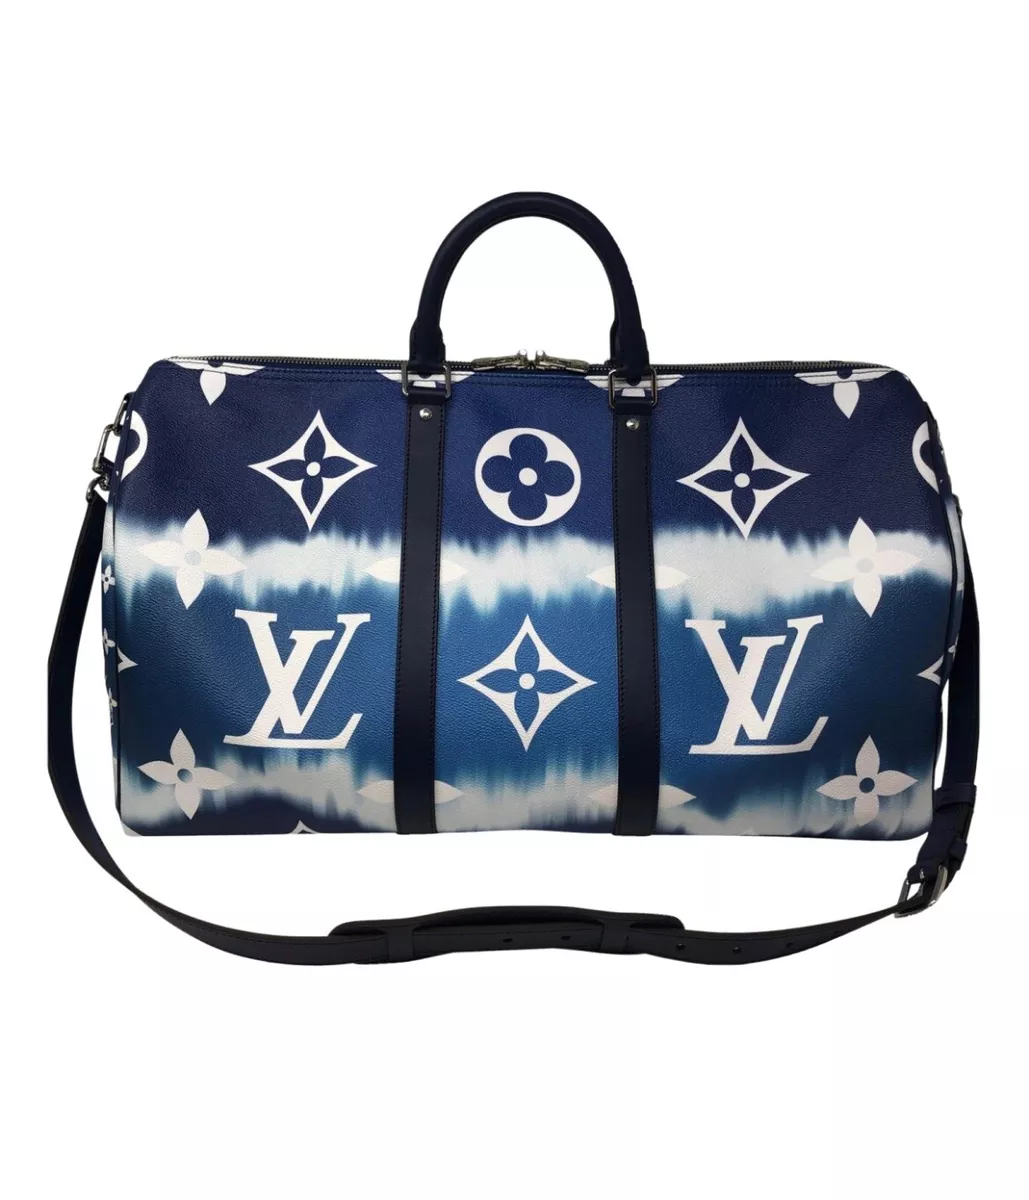 Louis Vuitton Escale Blue Keepall 50 Duffle M45117 Giant Monogram Bag Full  Set